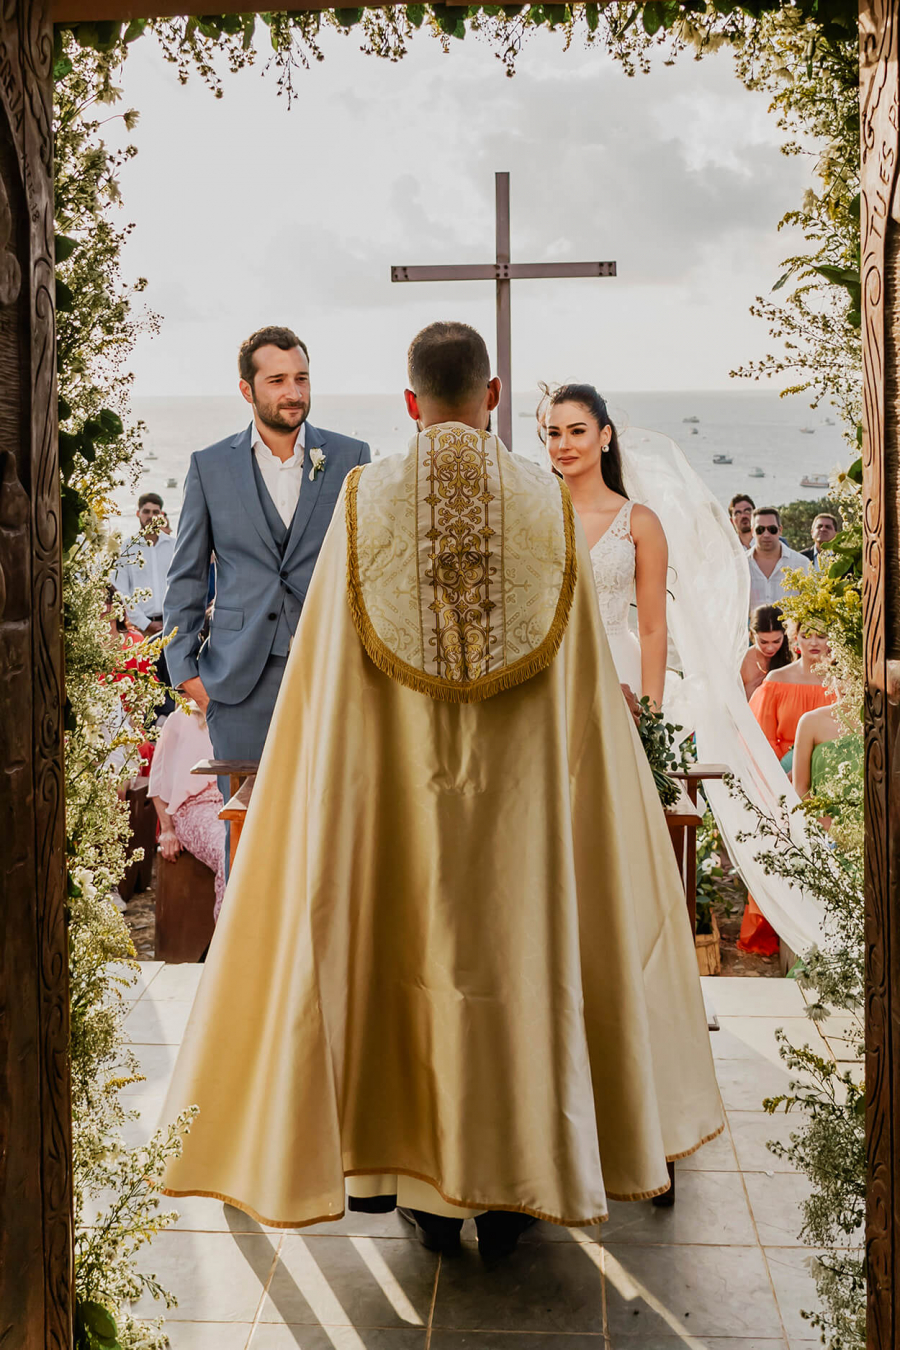  Casamento-na-capela-Fernando-de-Noronha (3)